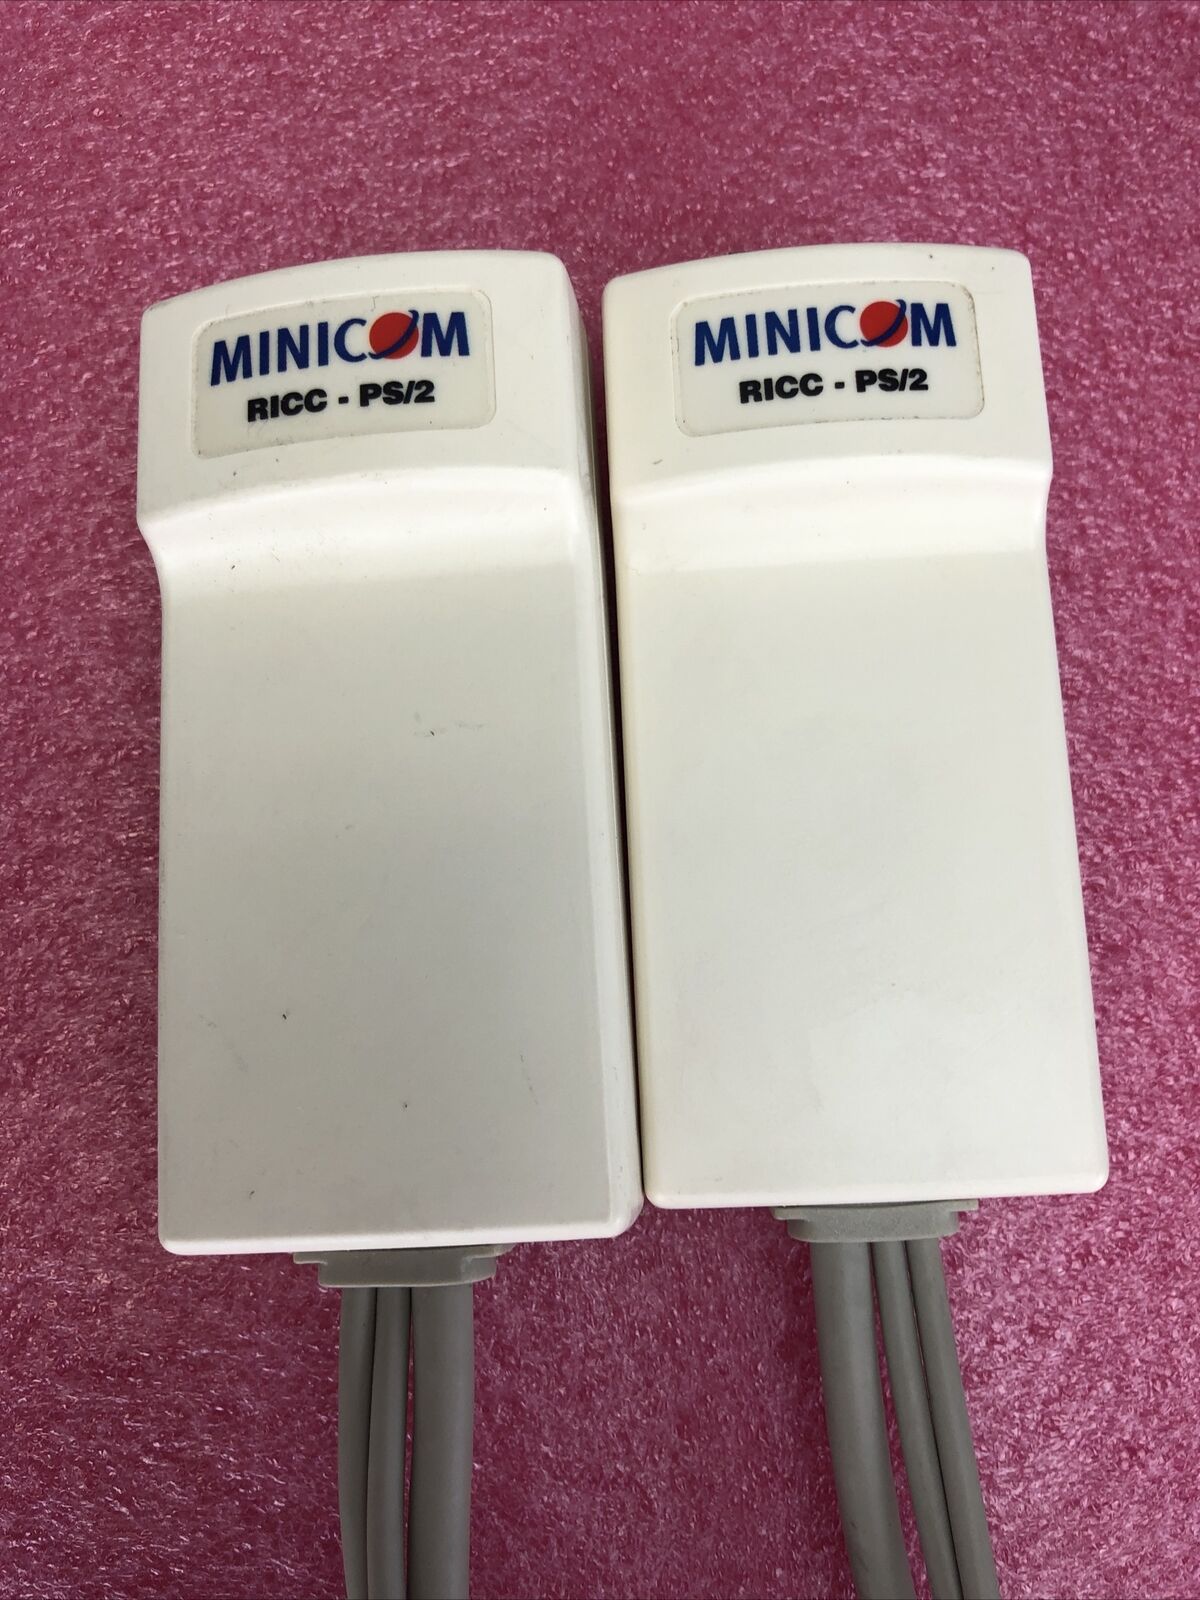 Lot of 2 Minicom 1SU51019 RICC-PS/2 VGA Network Cable KVM Switch Extender Remote